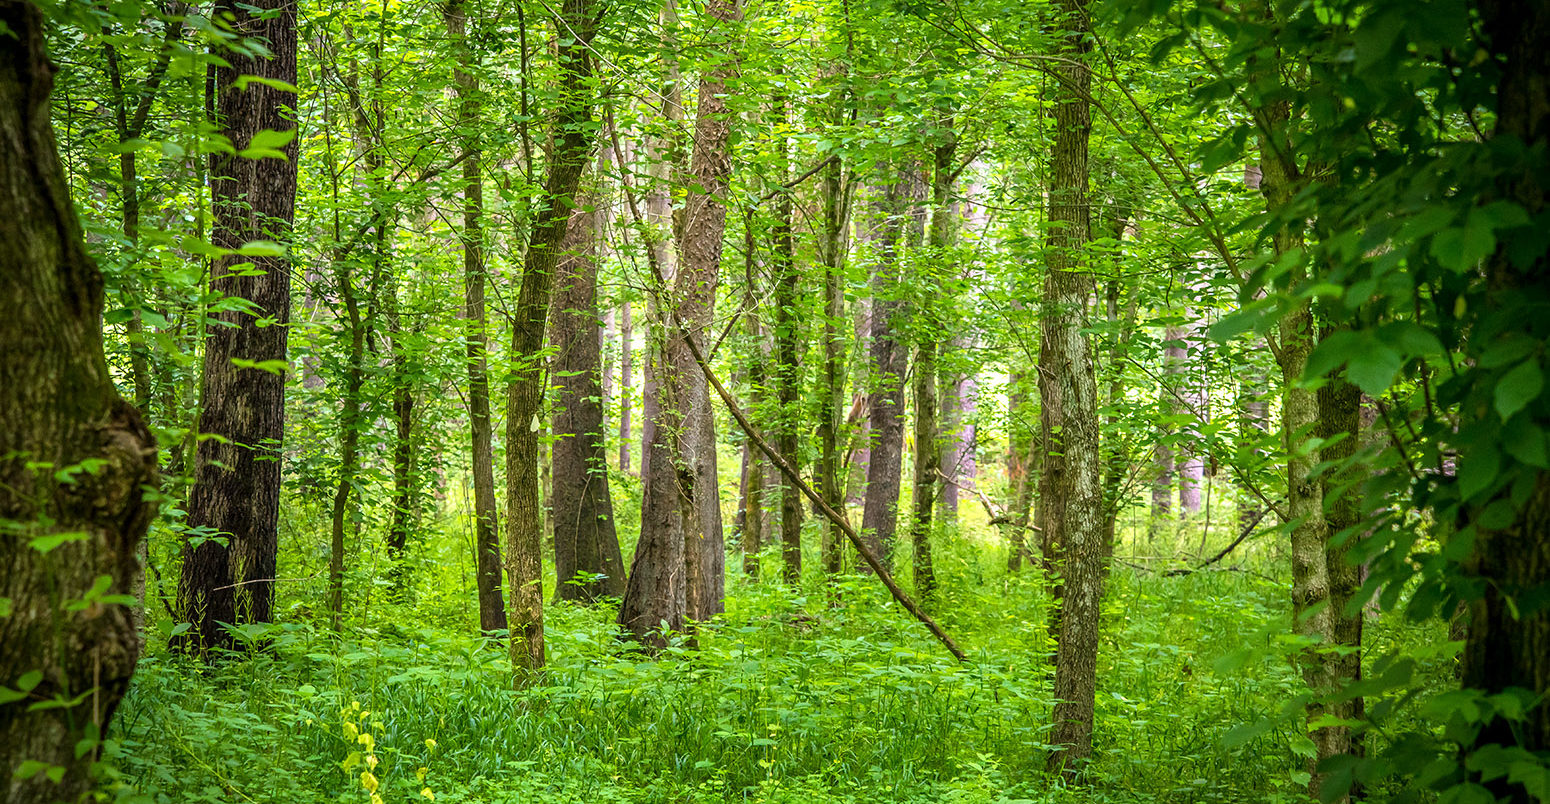 Boonsboro forest, Maryland, US. Credit: Joseph Thomas / Alamy Stock Photo. J90GD7